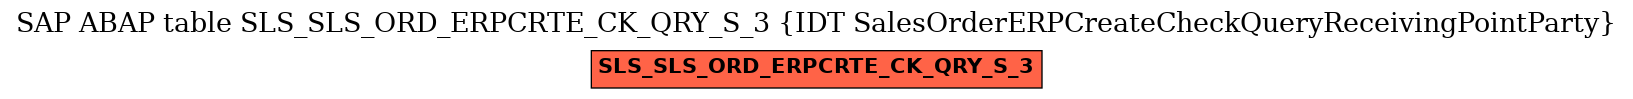 E-R Diagram for table SLS_SLS_ORD_ERPCRTE_CK_QRY_S_3 (IDT SalesOrderERPCreateCheckQueryReceivingPointParty)